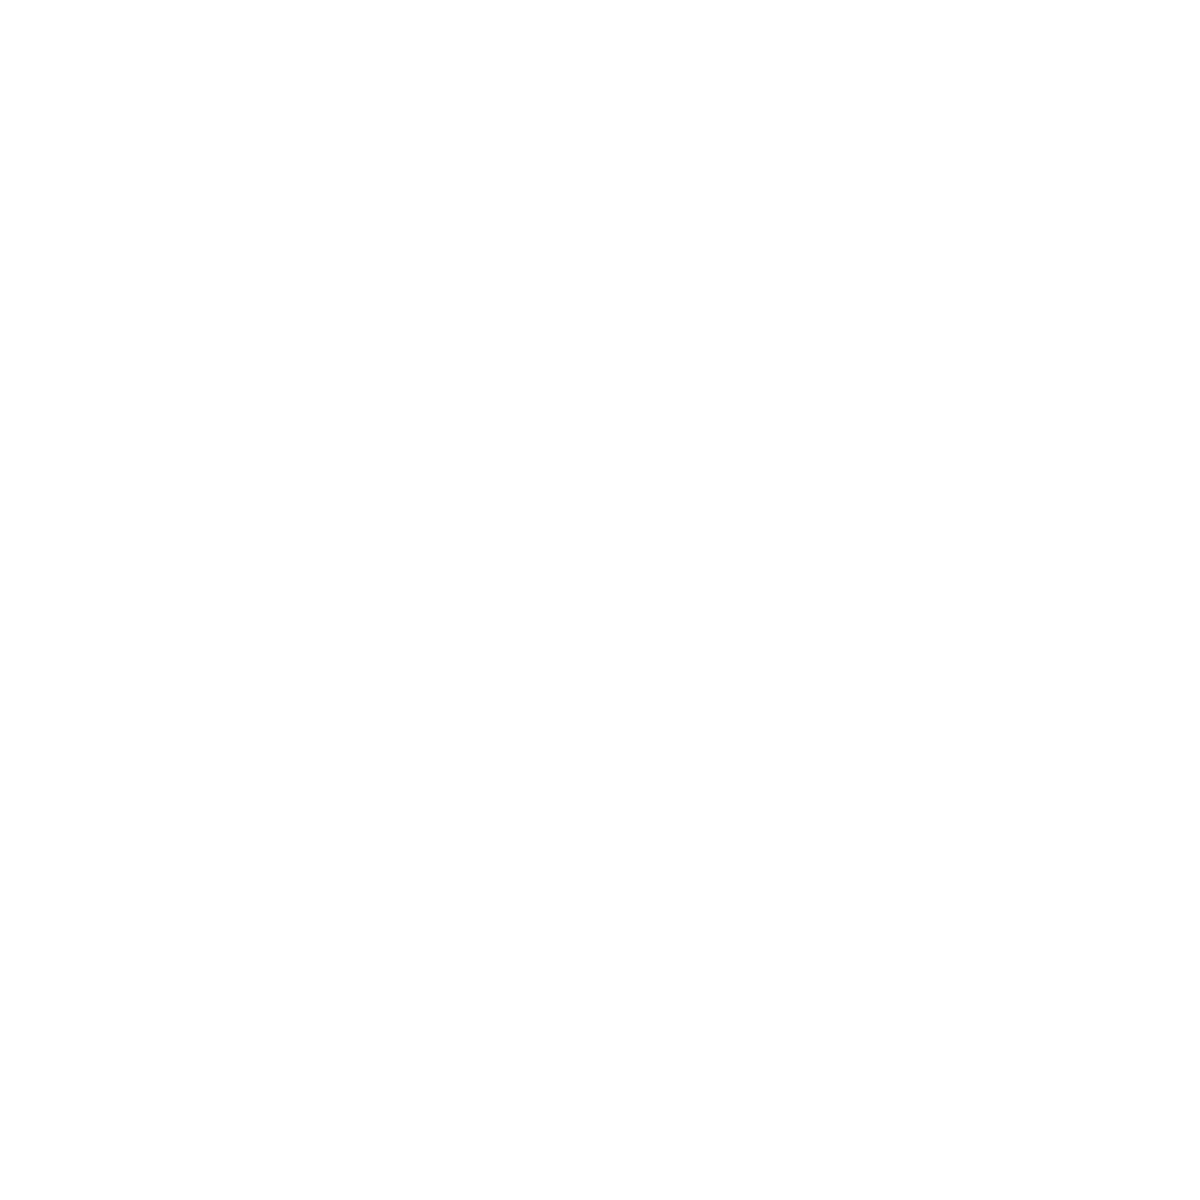 Mitchell Wall St. Louis Architecture & Design logo